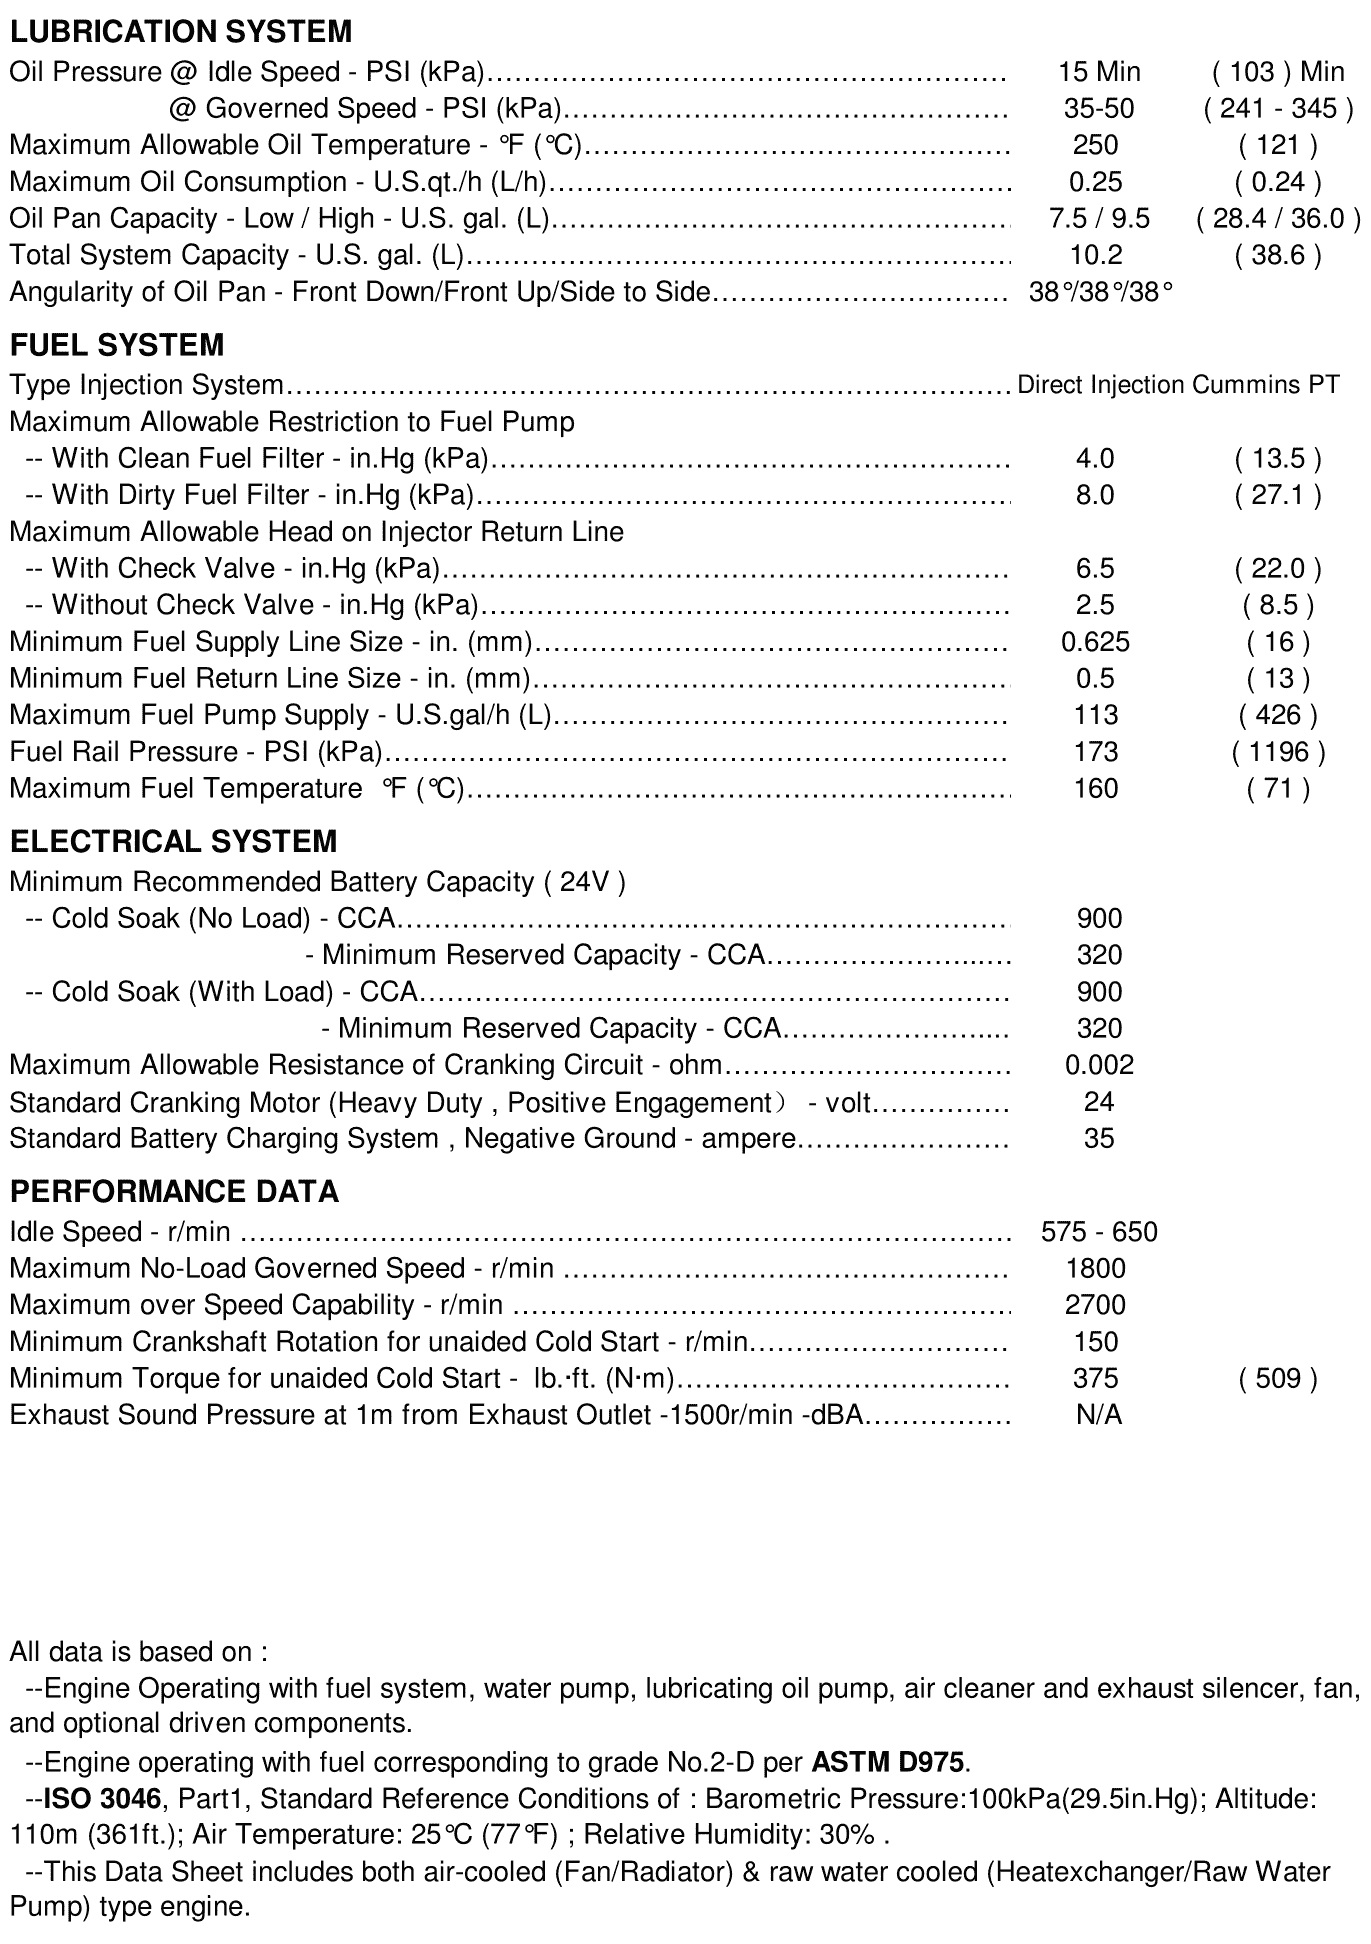 Cummins NTAA855-G7A datasheet